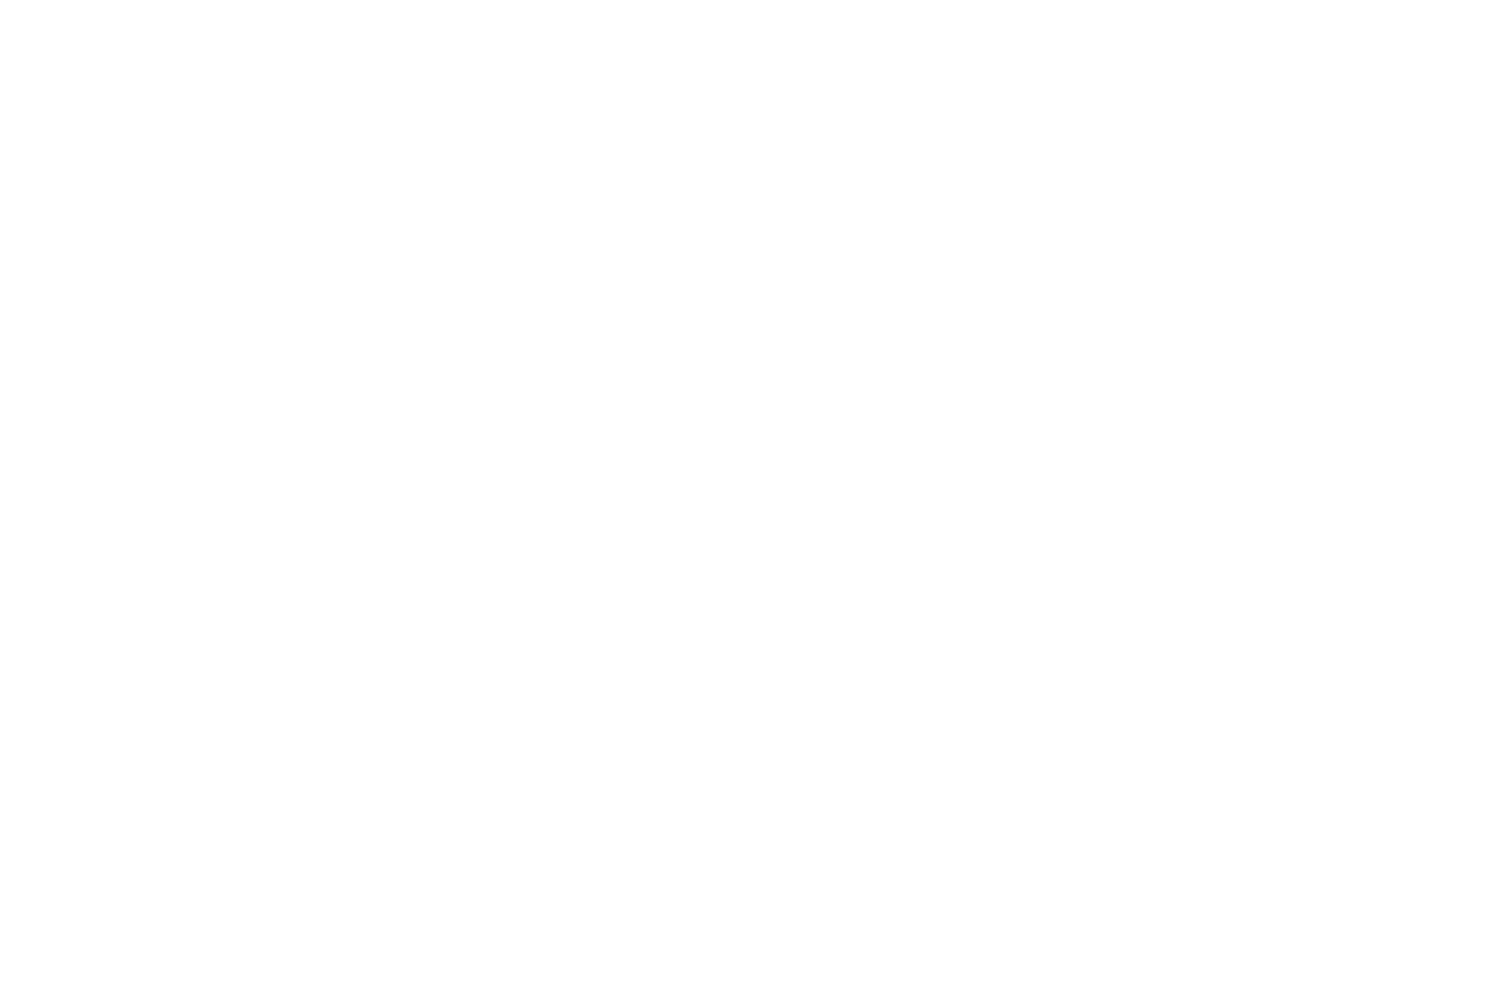 Libby Copa